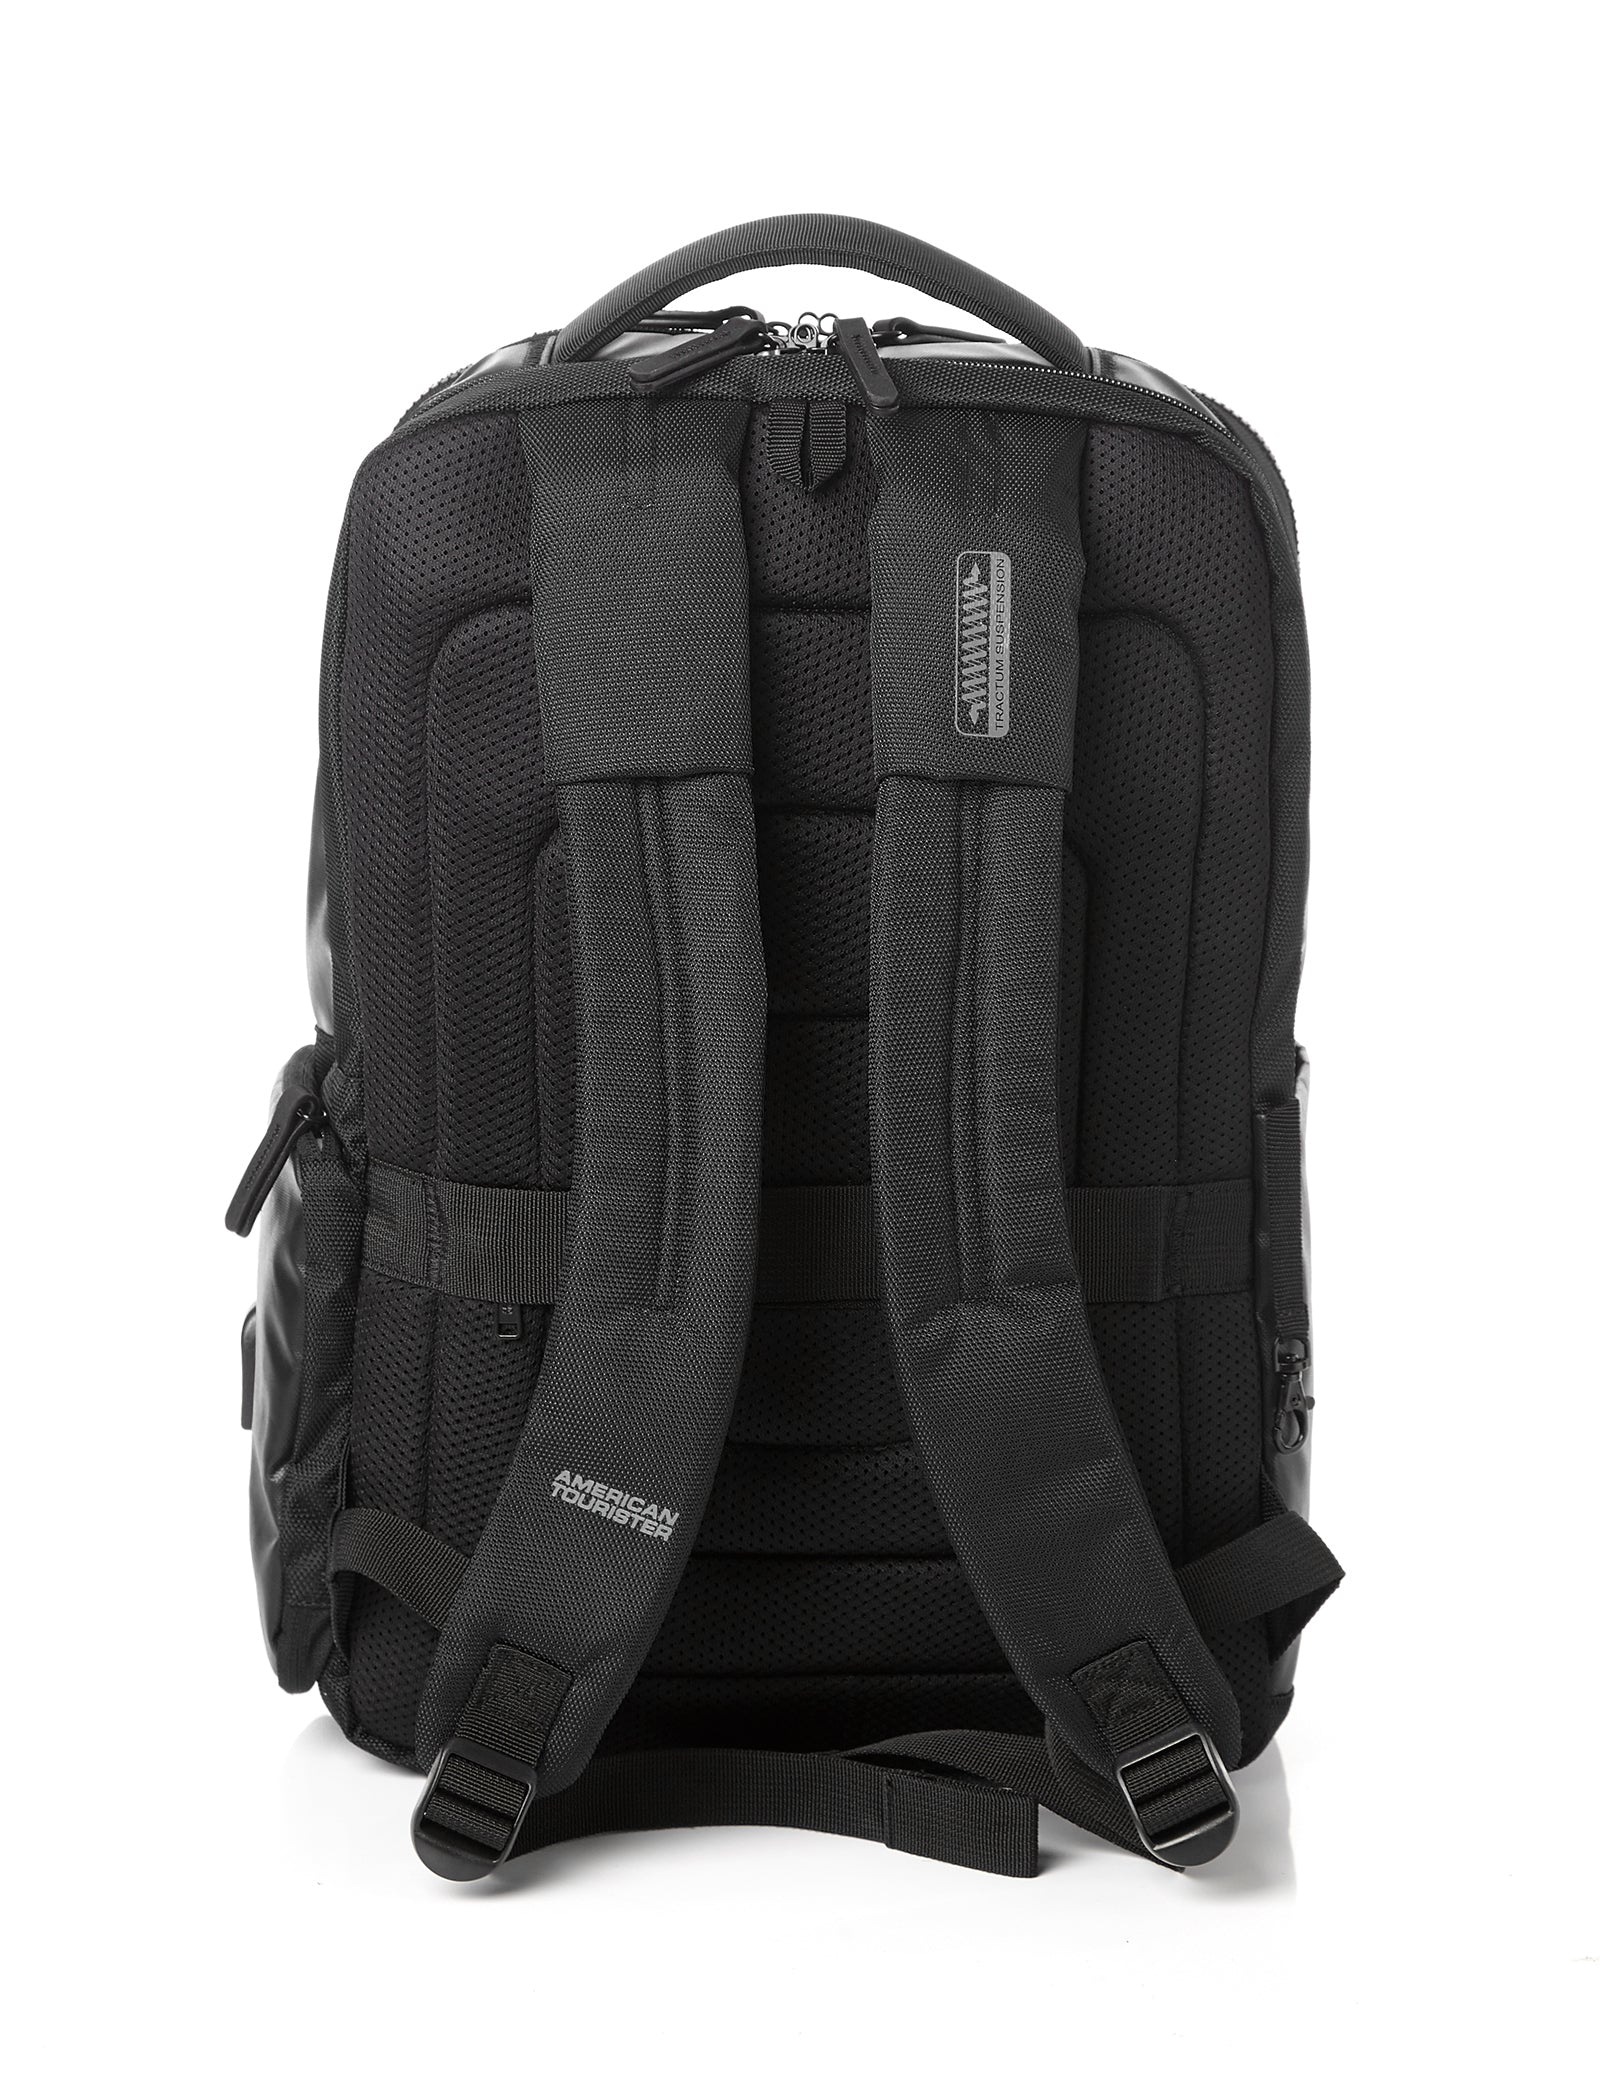 American Tourister - ZORK Backpack 2 AS - Black-4